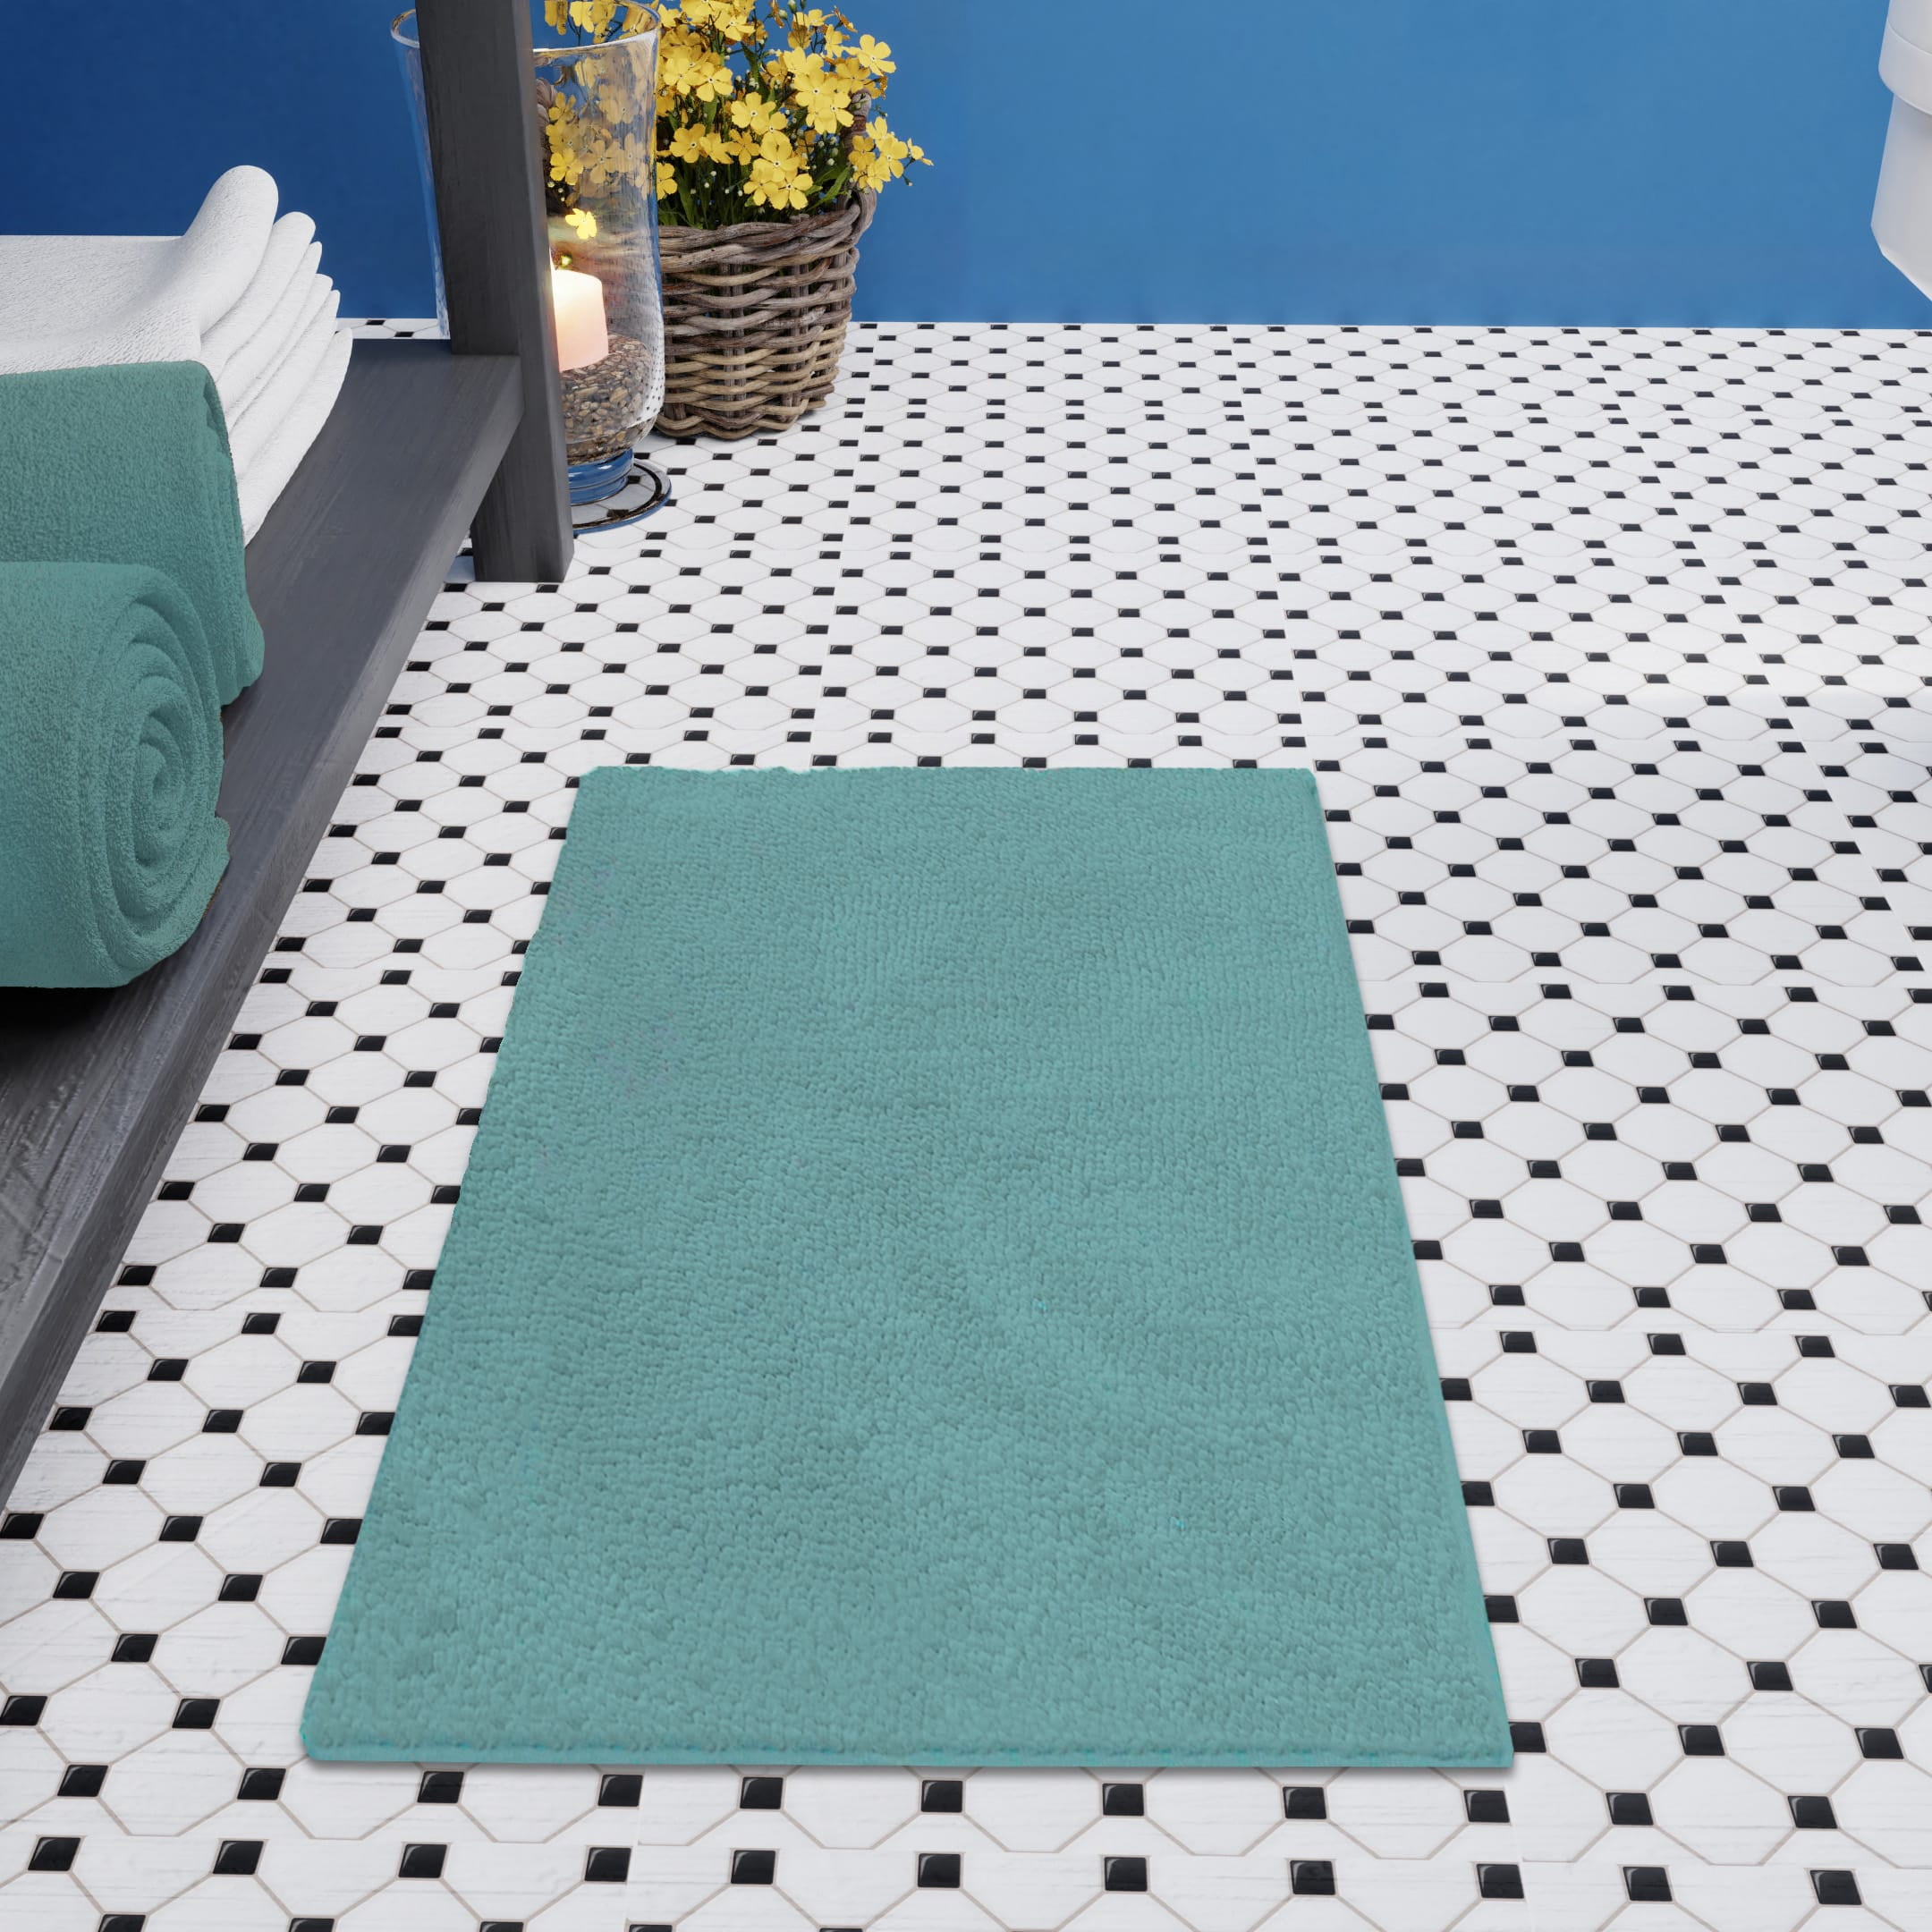 BELADOR Bathroom Rugs Sets 2 Piece - Plush Bath Mat Set Quick-Dry Soft  Chenille Bathroom Mat